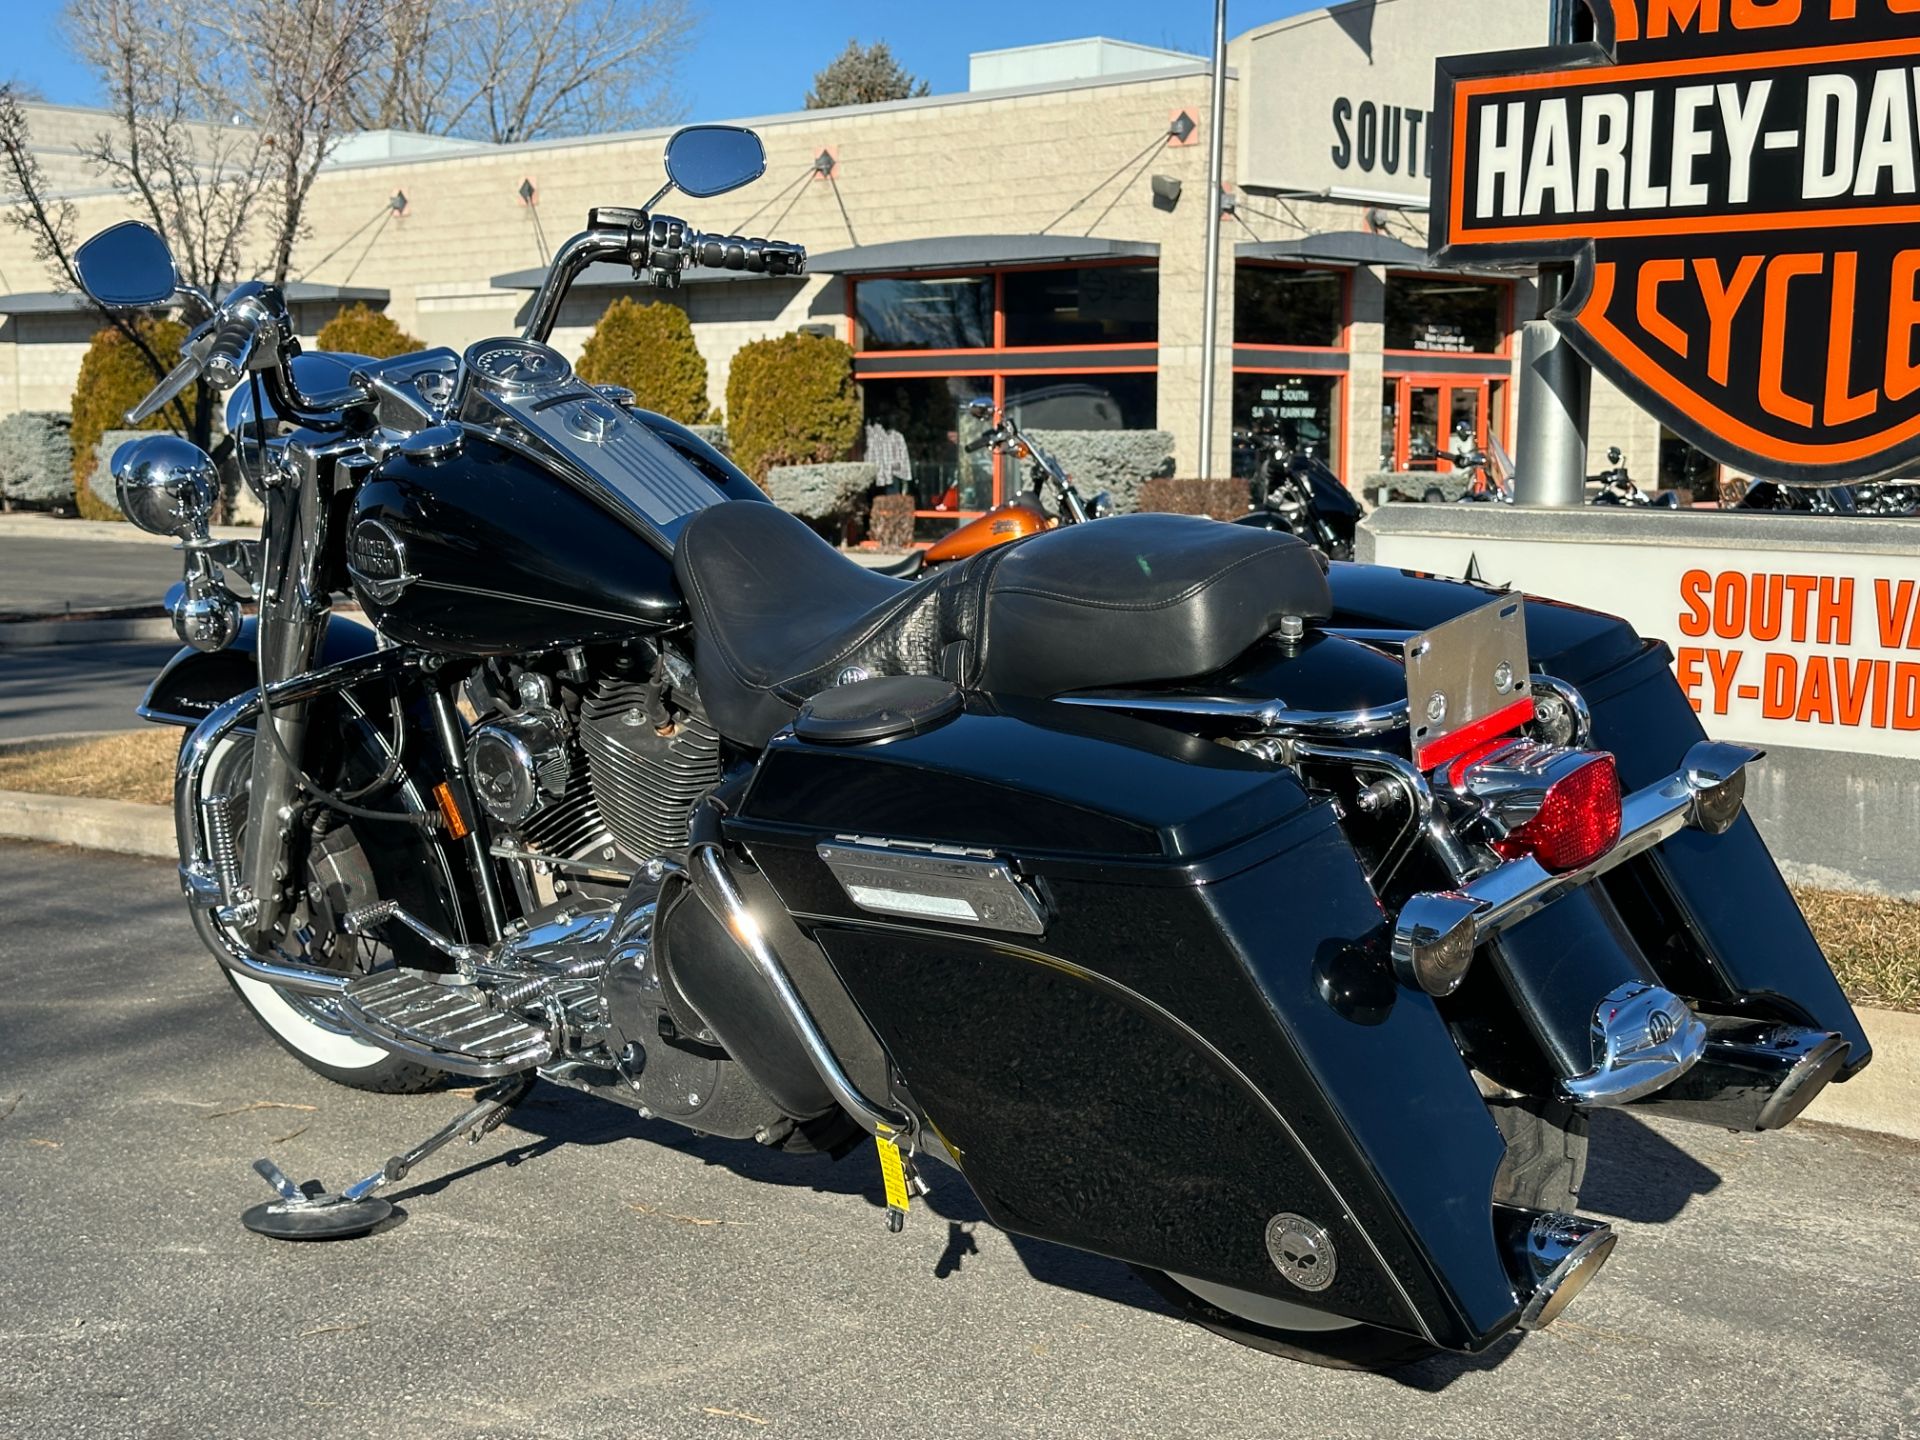 2008 Harley-Davidson Road King® Classic in Sandy, Utah - Photo 14